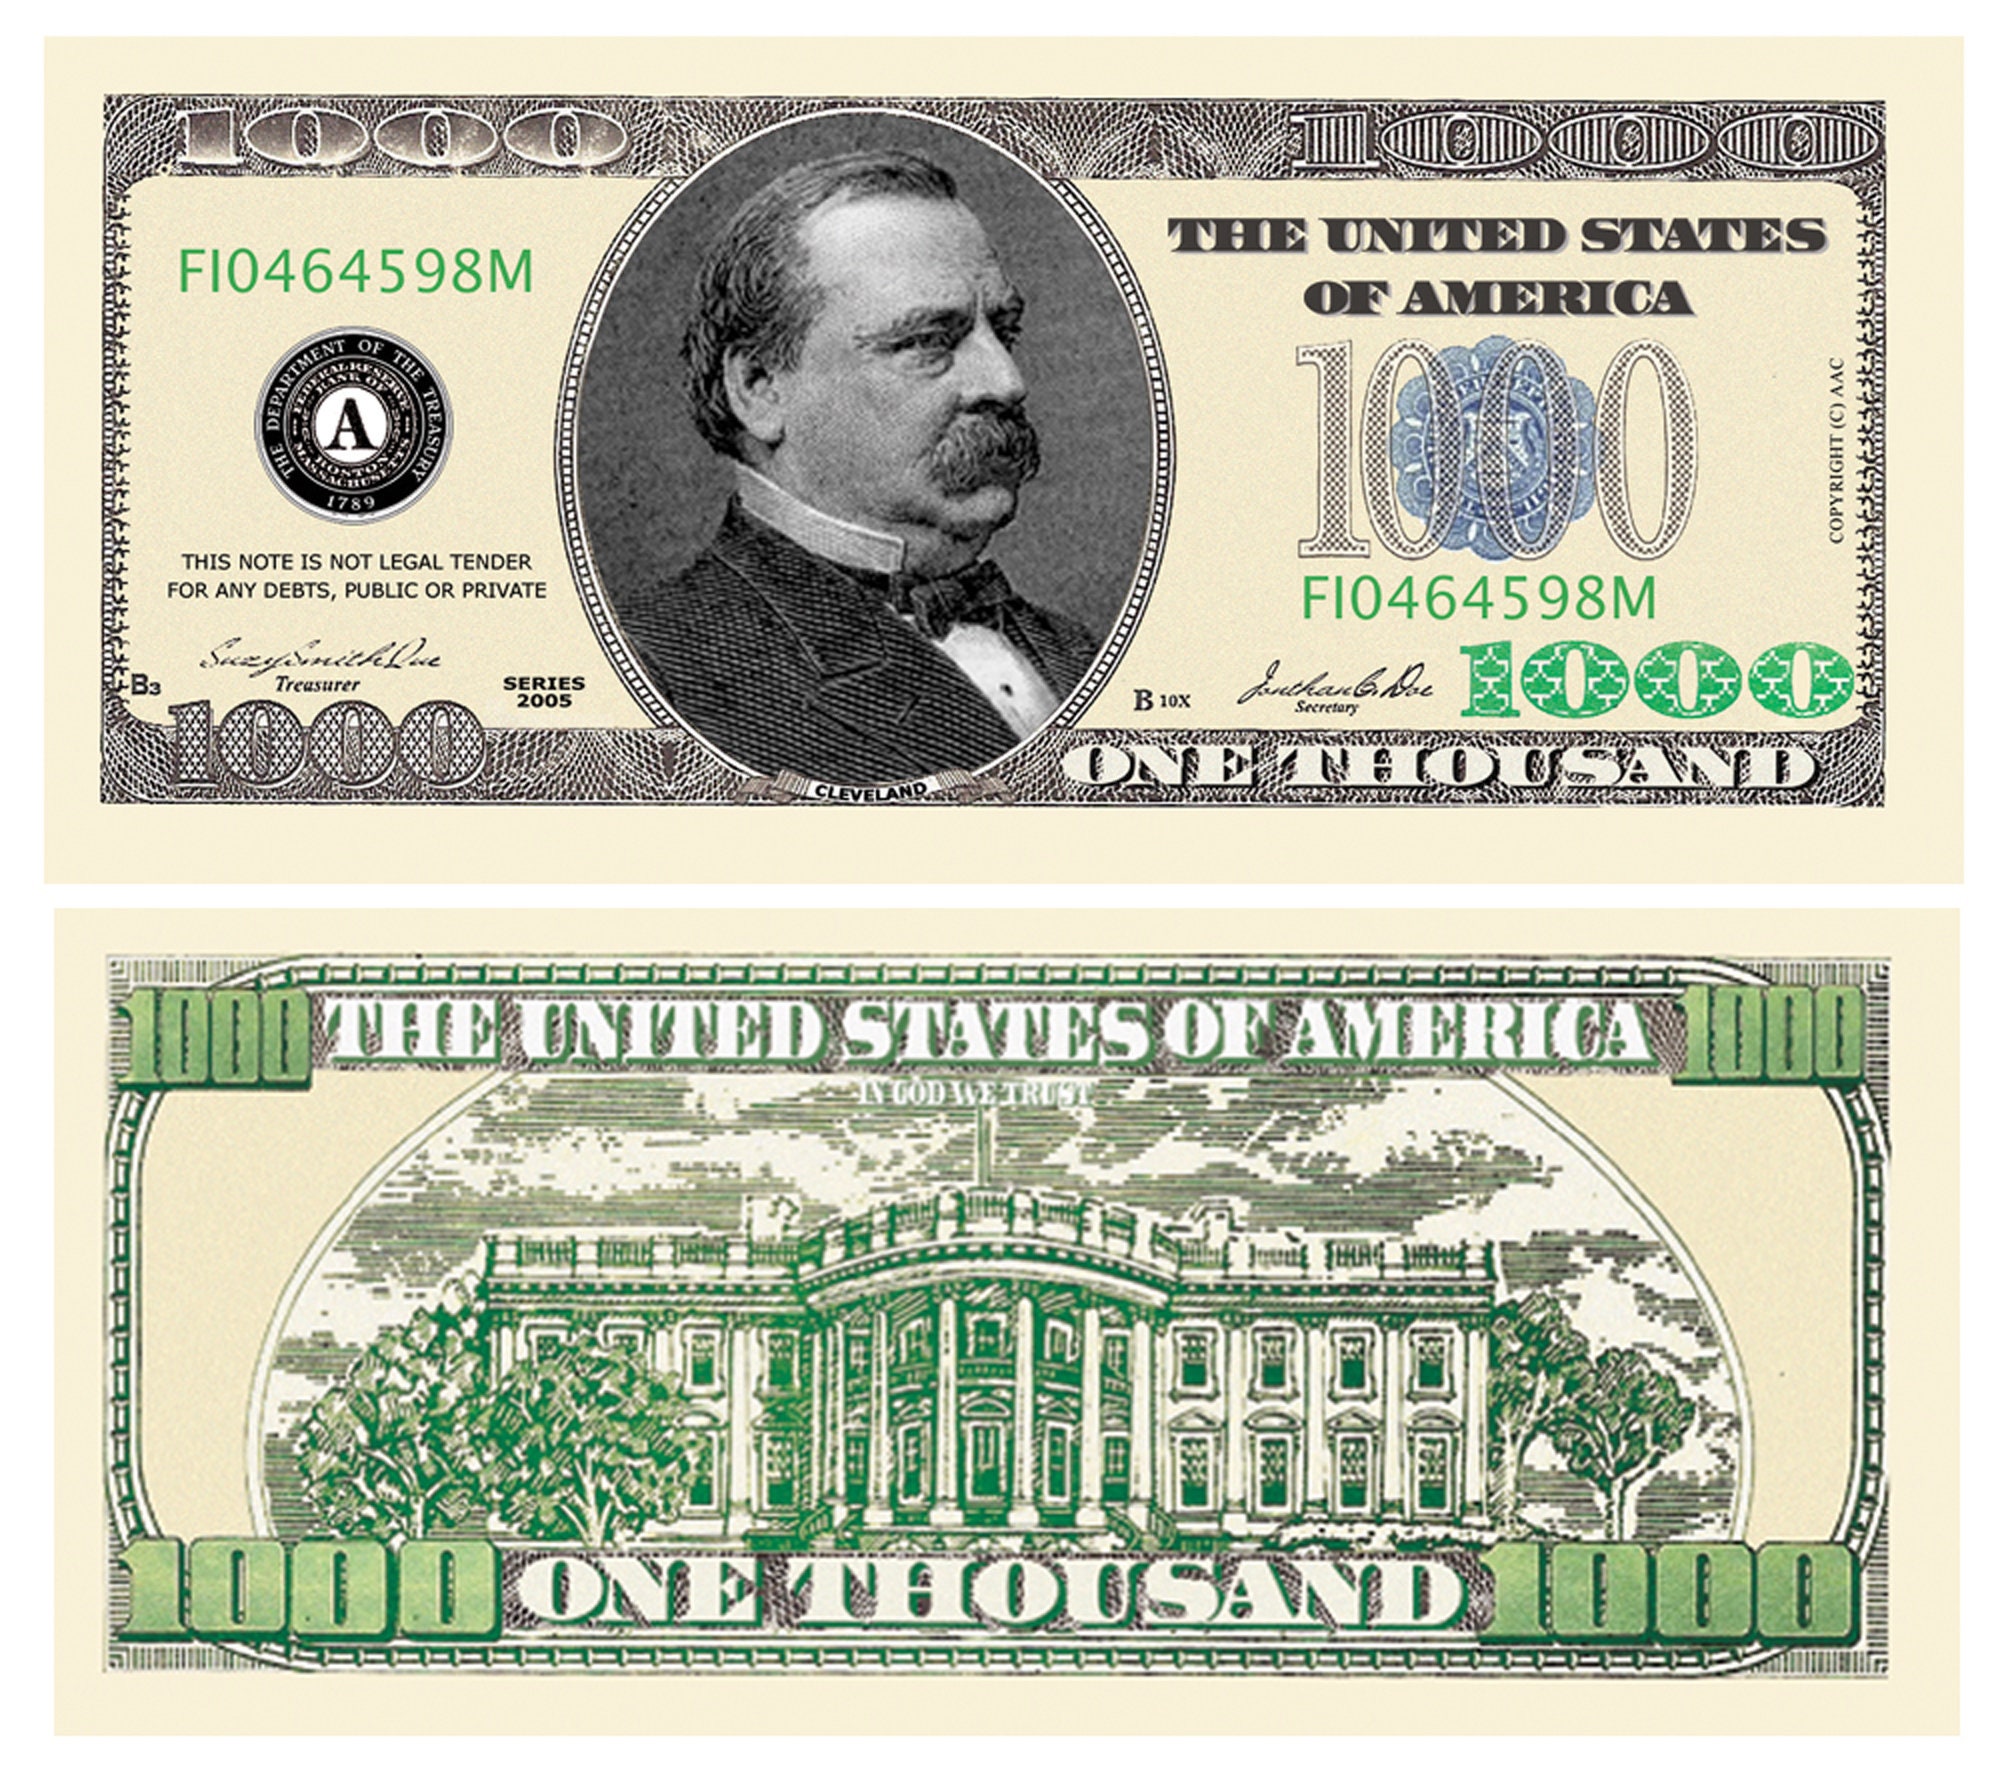 Image 1000 Dollar Bill